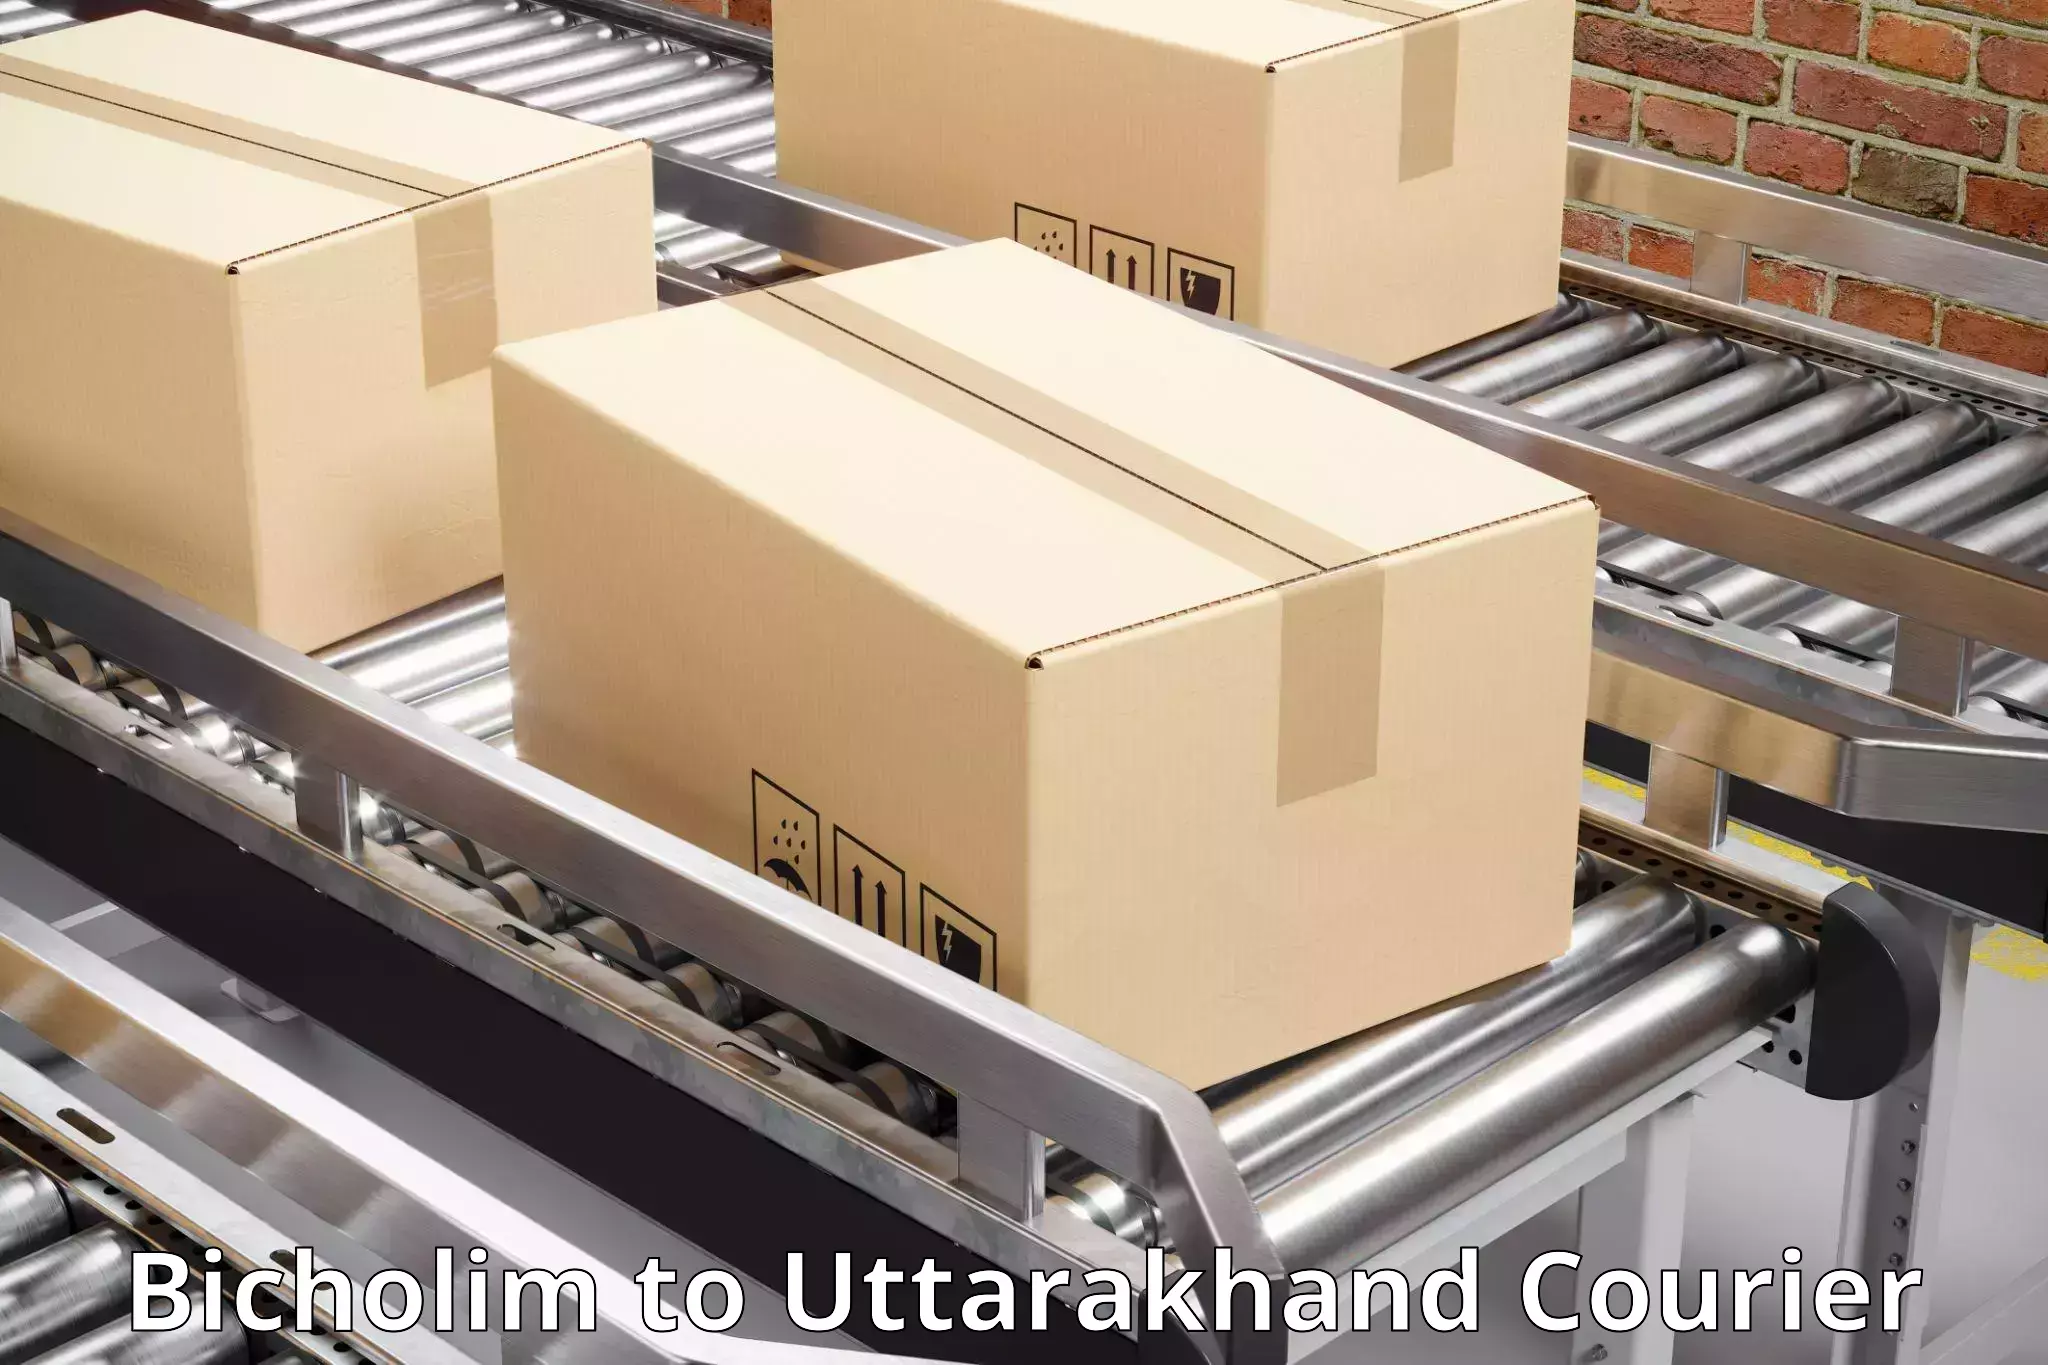 On-demand shipping options Bicholim to Rishikesh